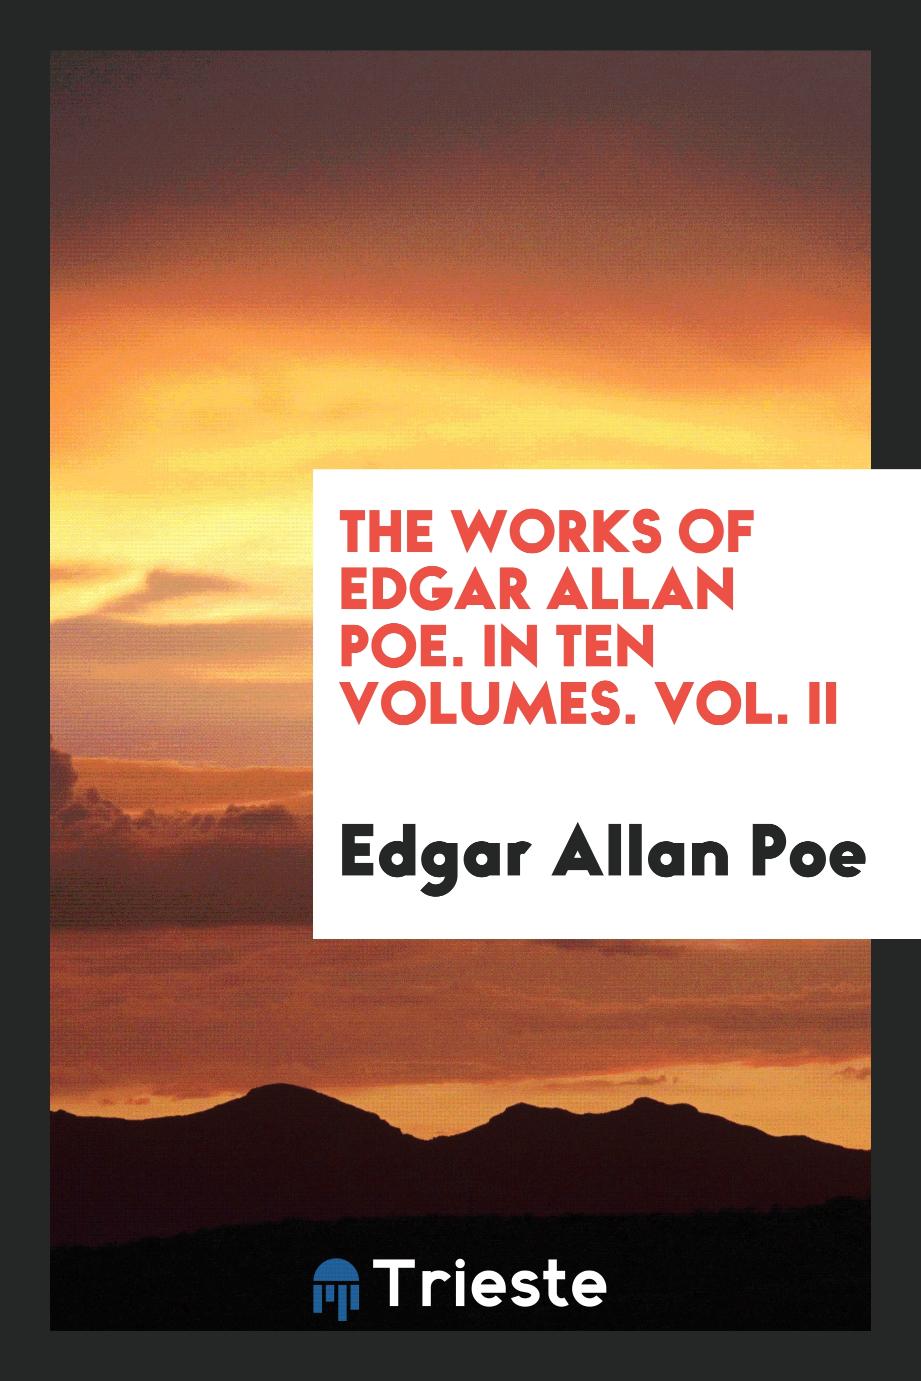 The works of Edgar Allan Poe. In ten volumes. Vol. II